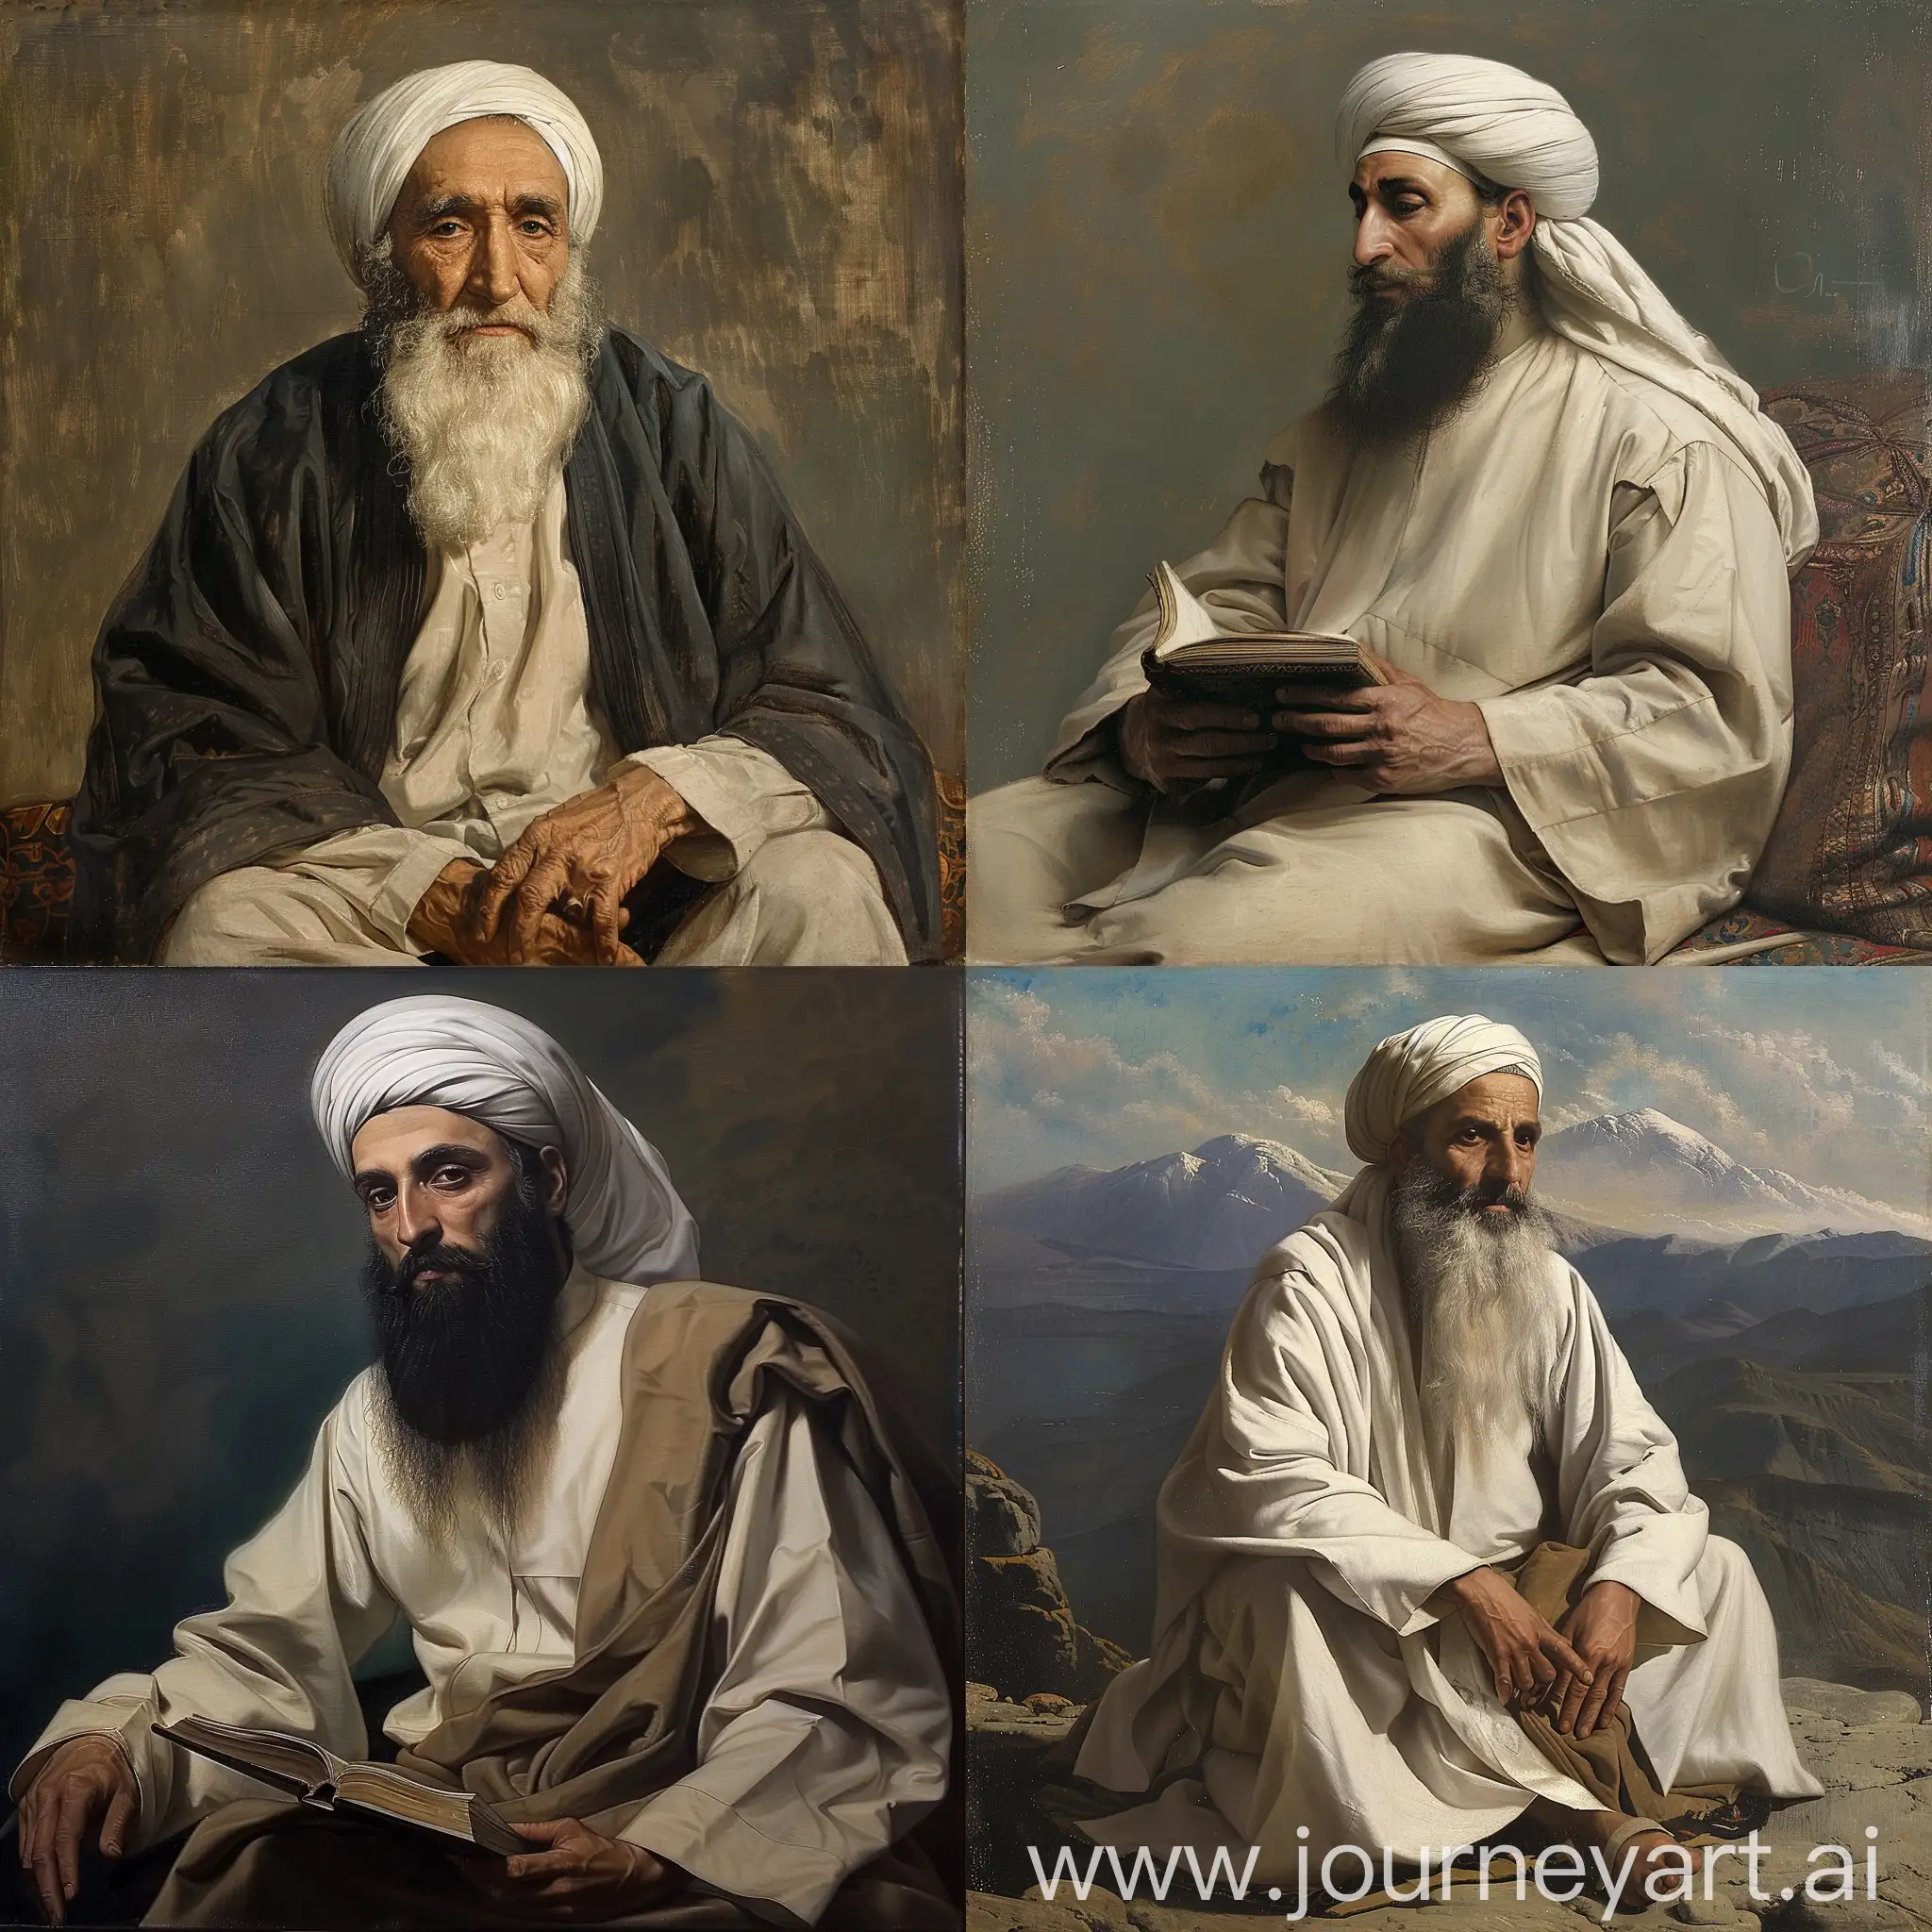 Muhammad-ibn-AbdulWahhab-Portrait-with-Islamic-Artistic-Elements